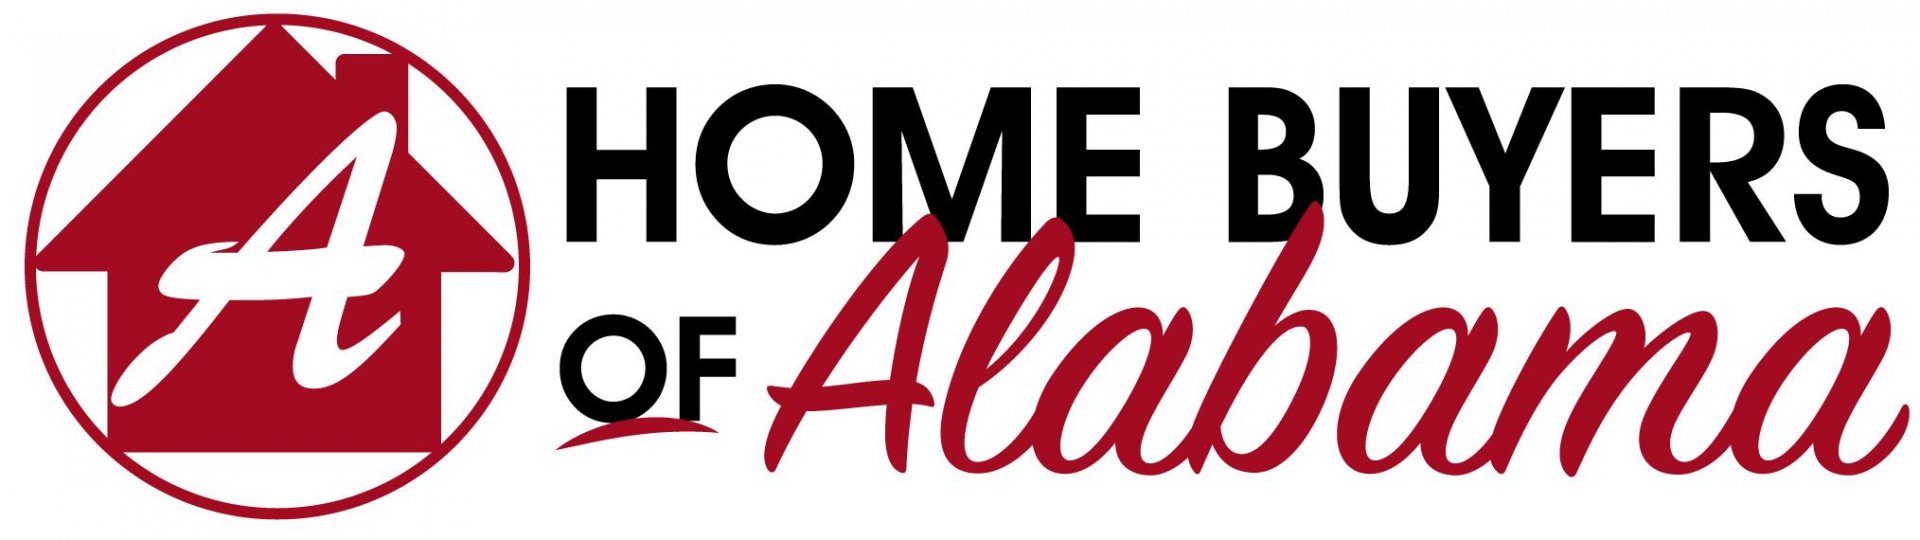 Home Buyers of Alabama logo